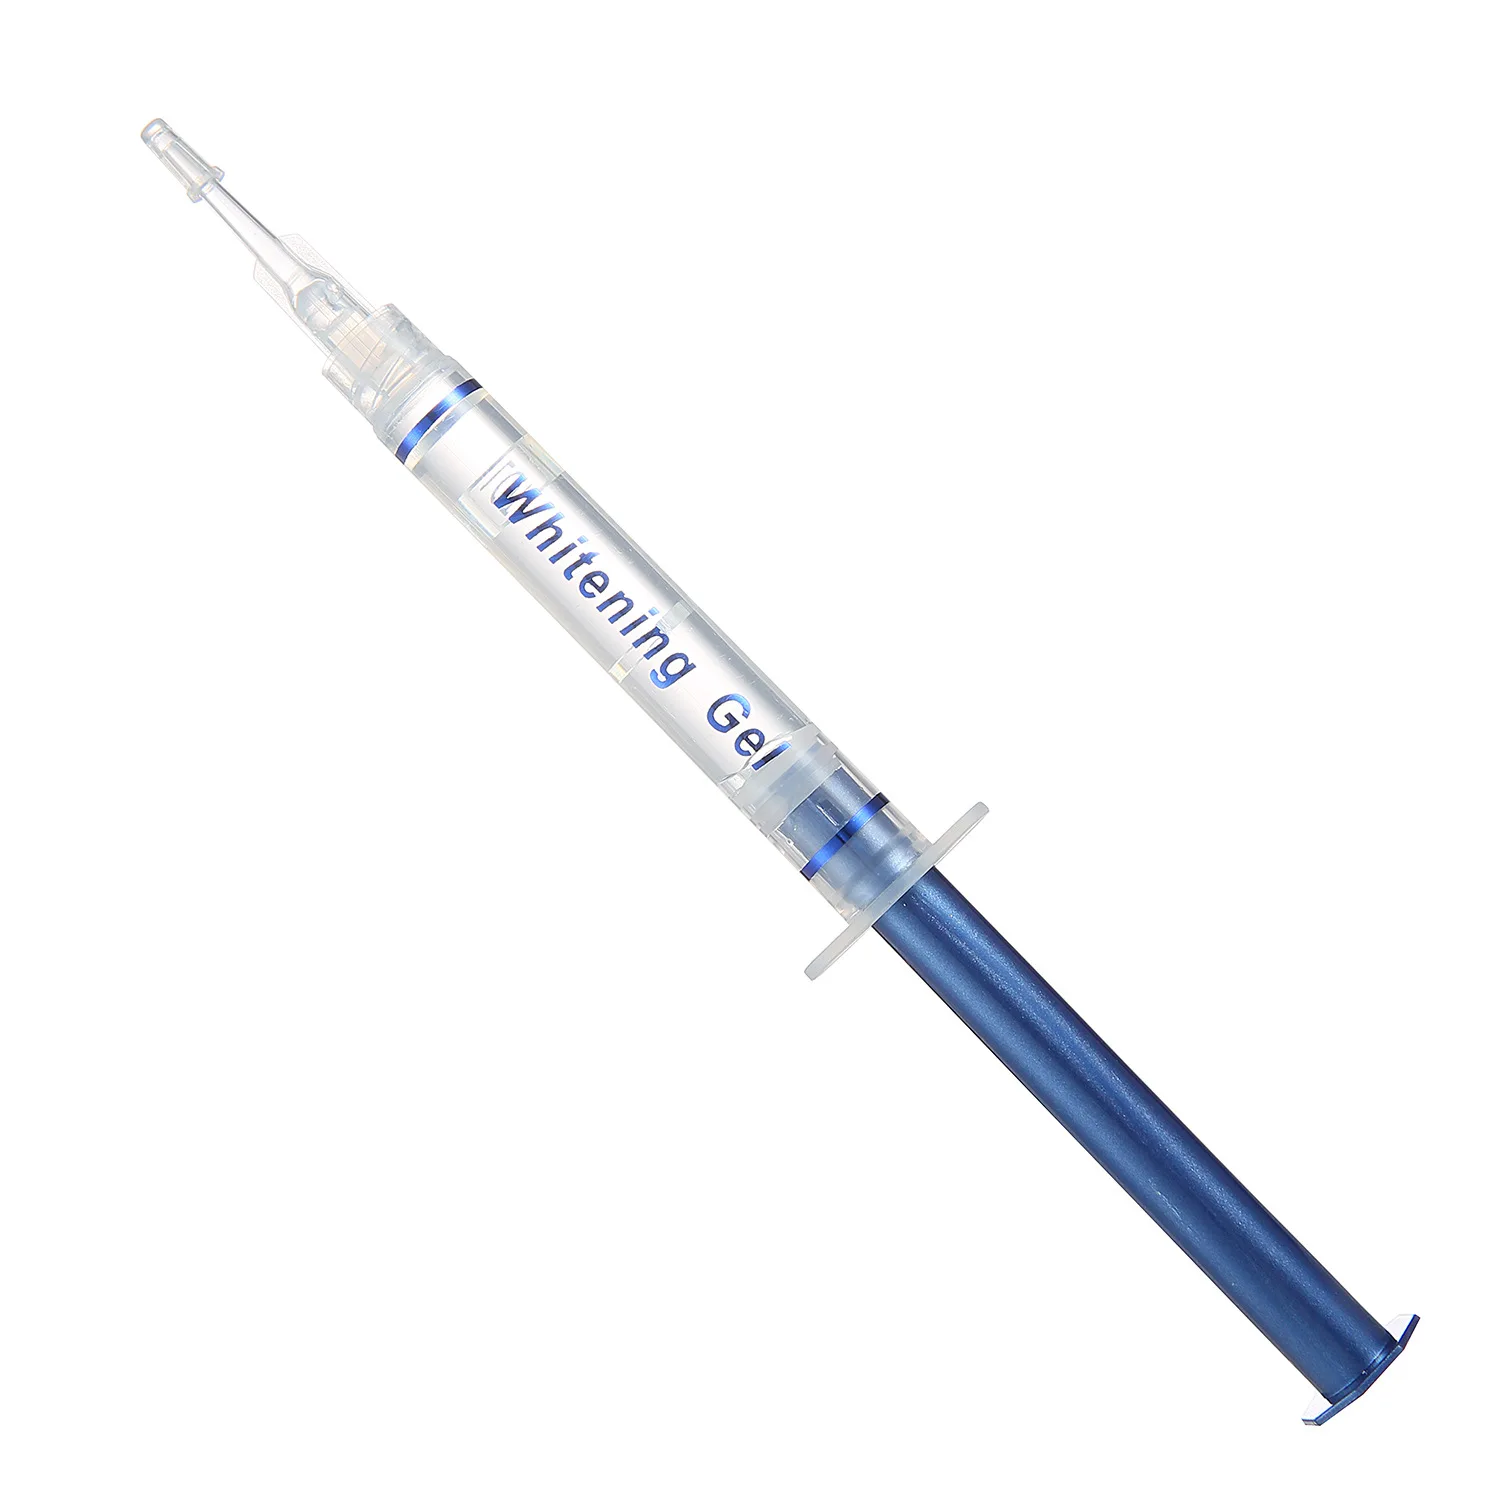 teeth whitening syringe 35%HP hydrogen peroxide whitening teeth gel